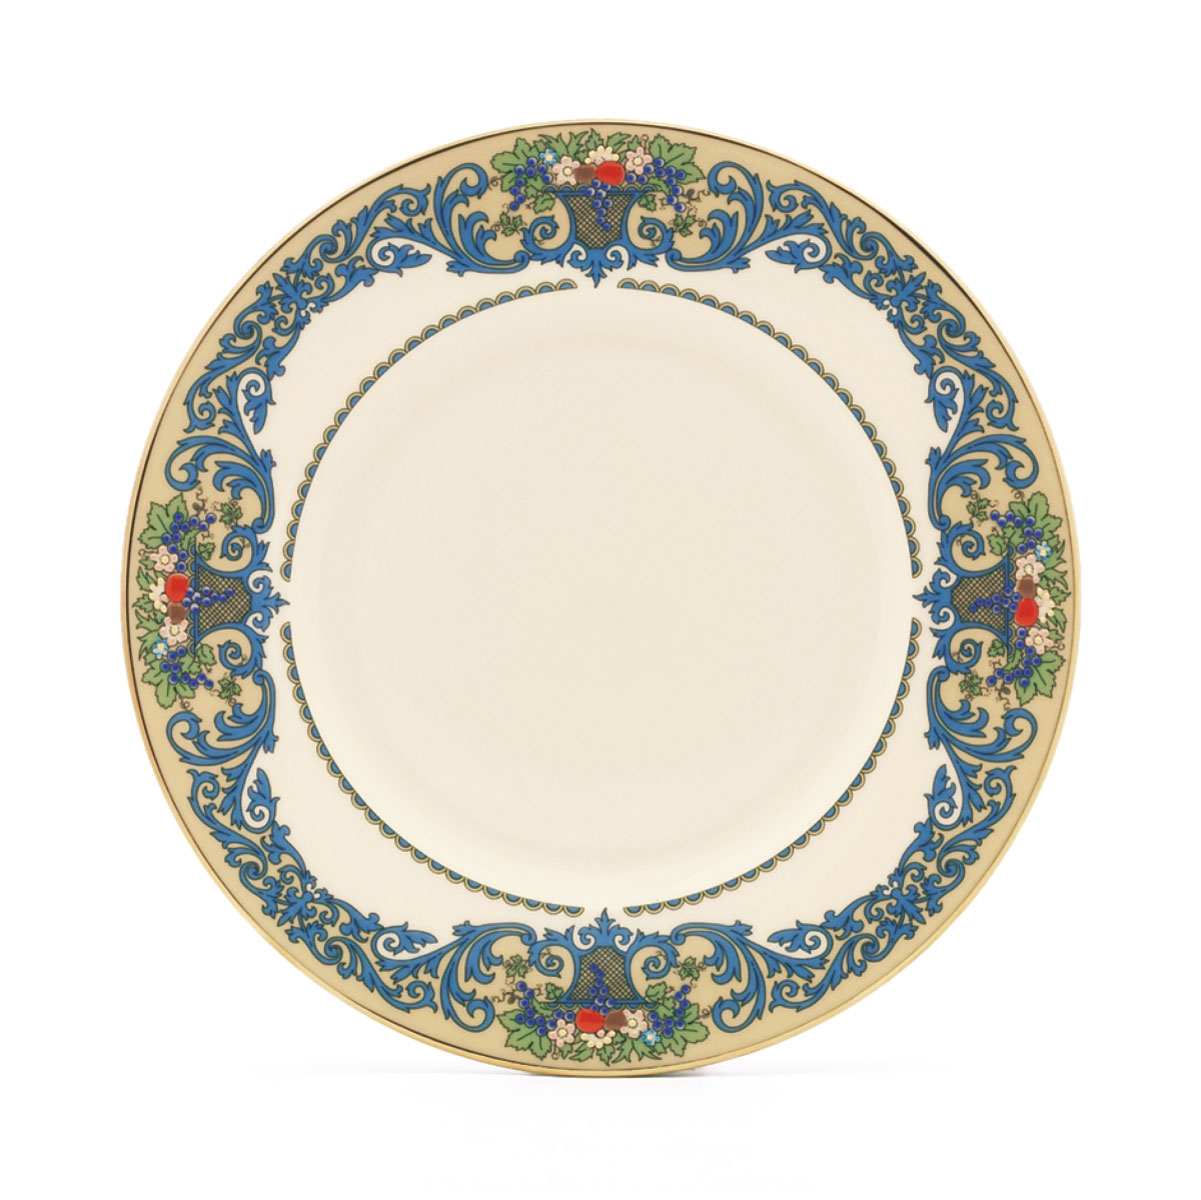 Lenox Autumn Dinnerware Accent Plate, Single